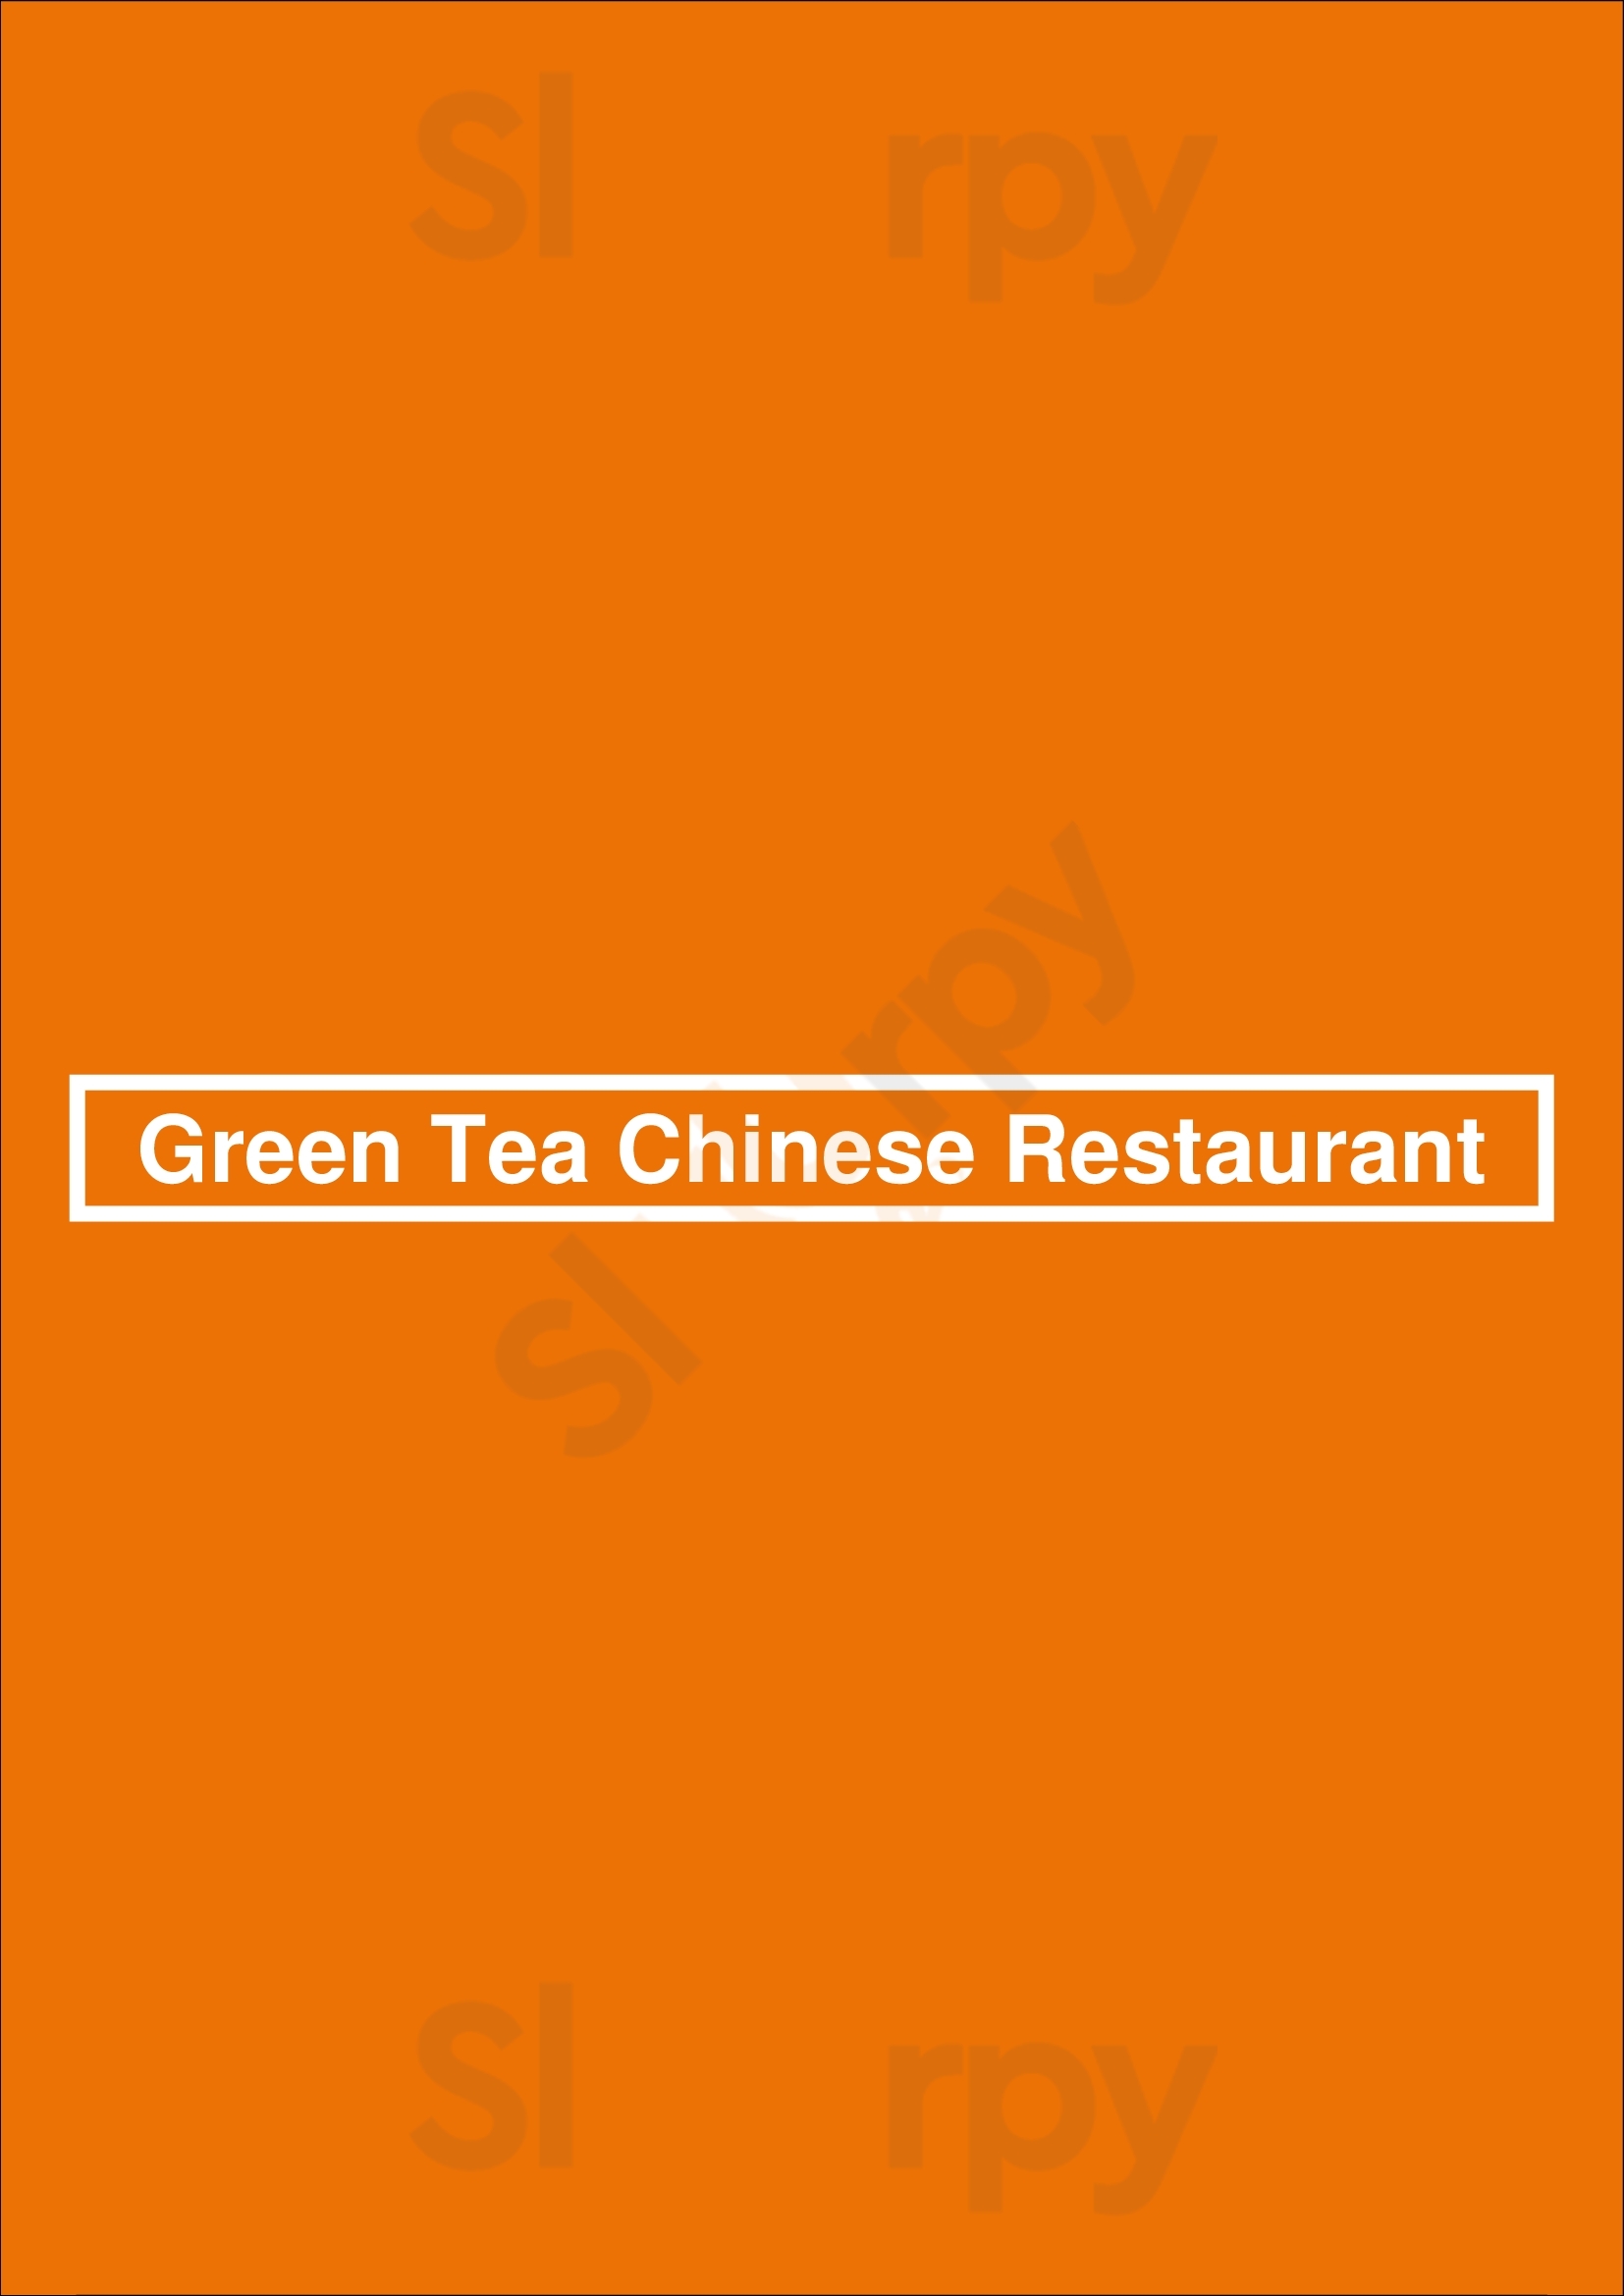 Green Tea Chinese Restaurant Farmington Menu - 1